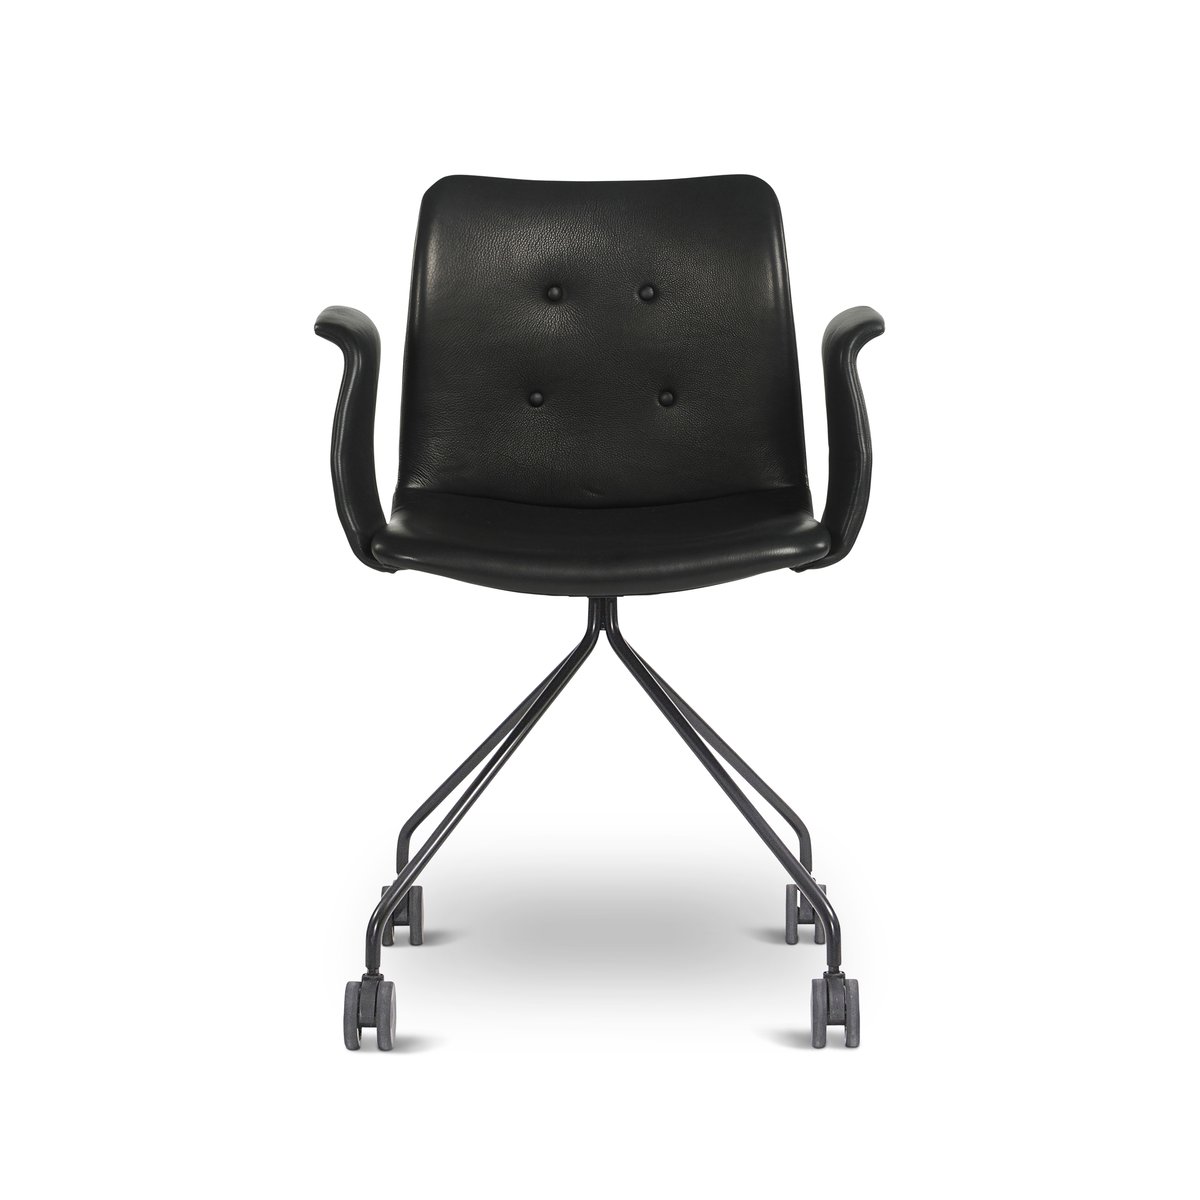 Bent Hansen Primum kontorsstol med armstöd läder svart, svart underrede hjul